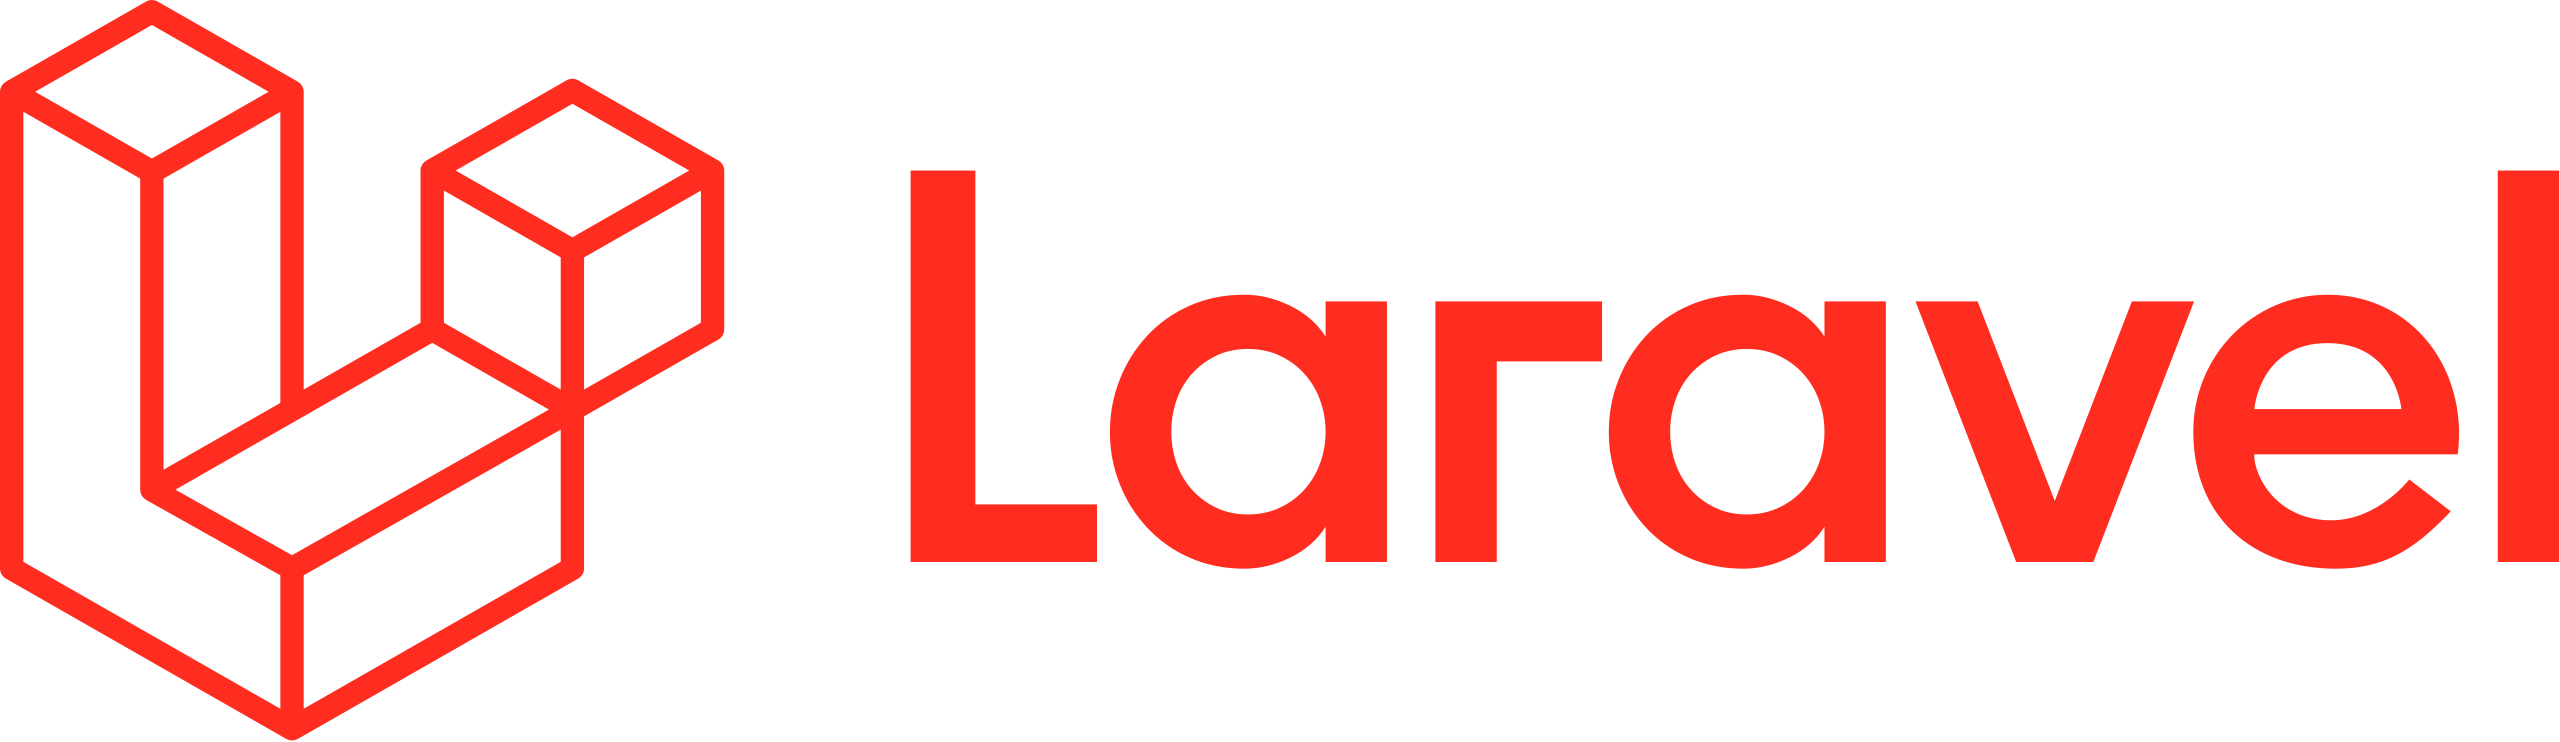 Laravel logo - Bluebird